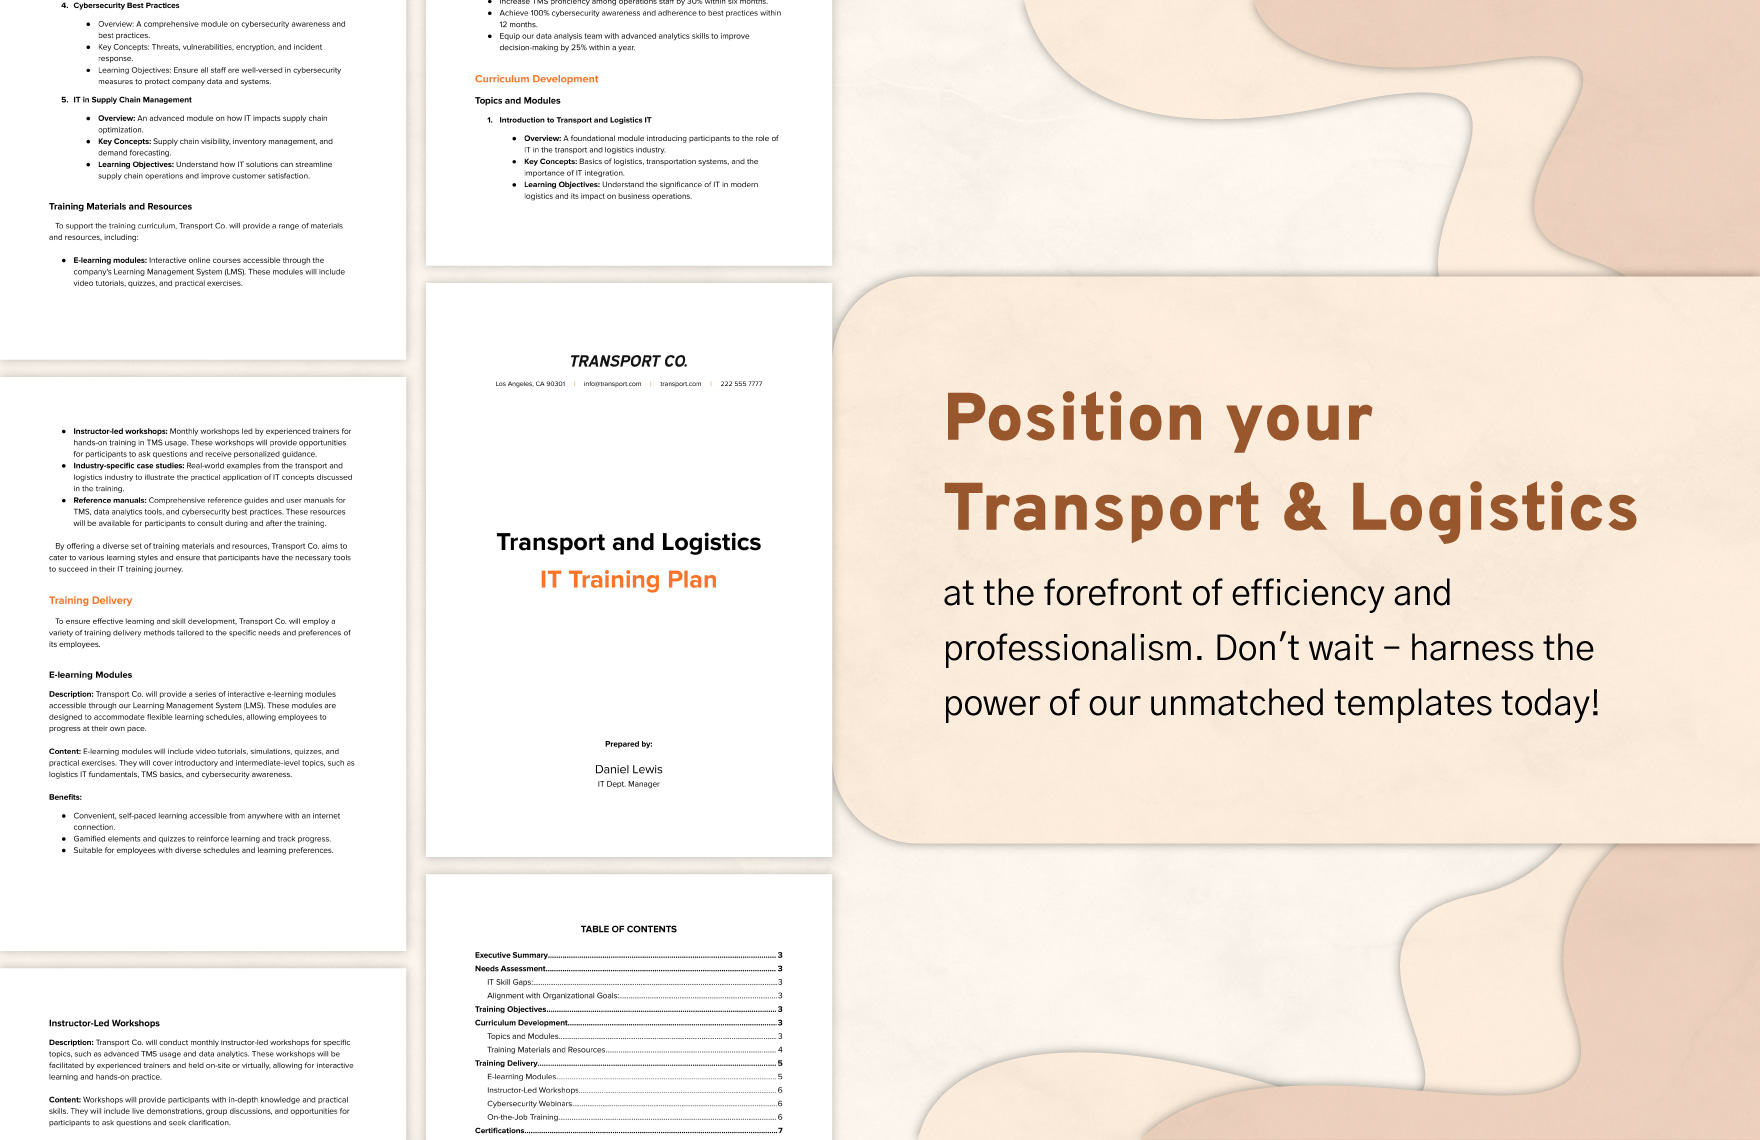 Transport and Logistics IT Training Plan Template